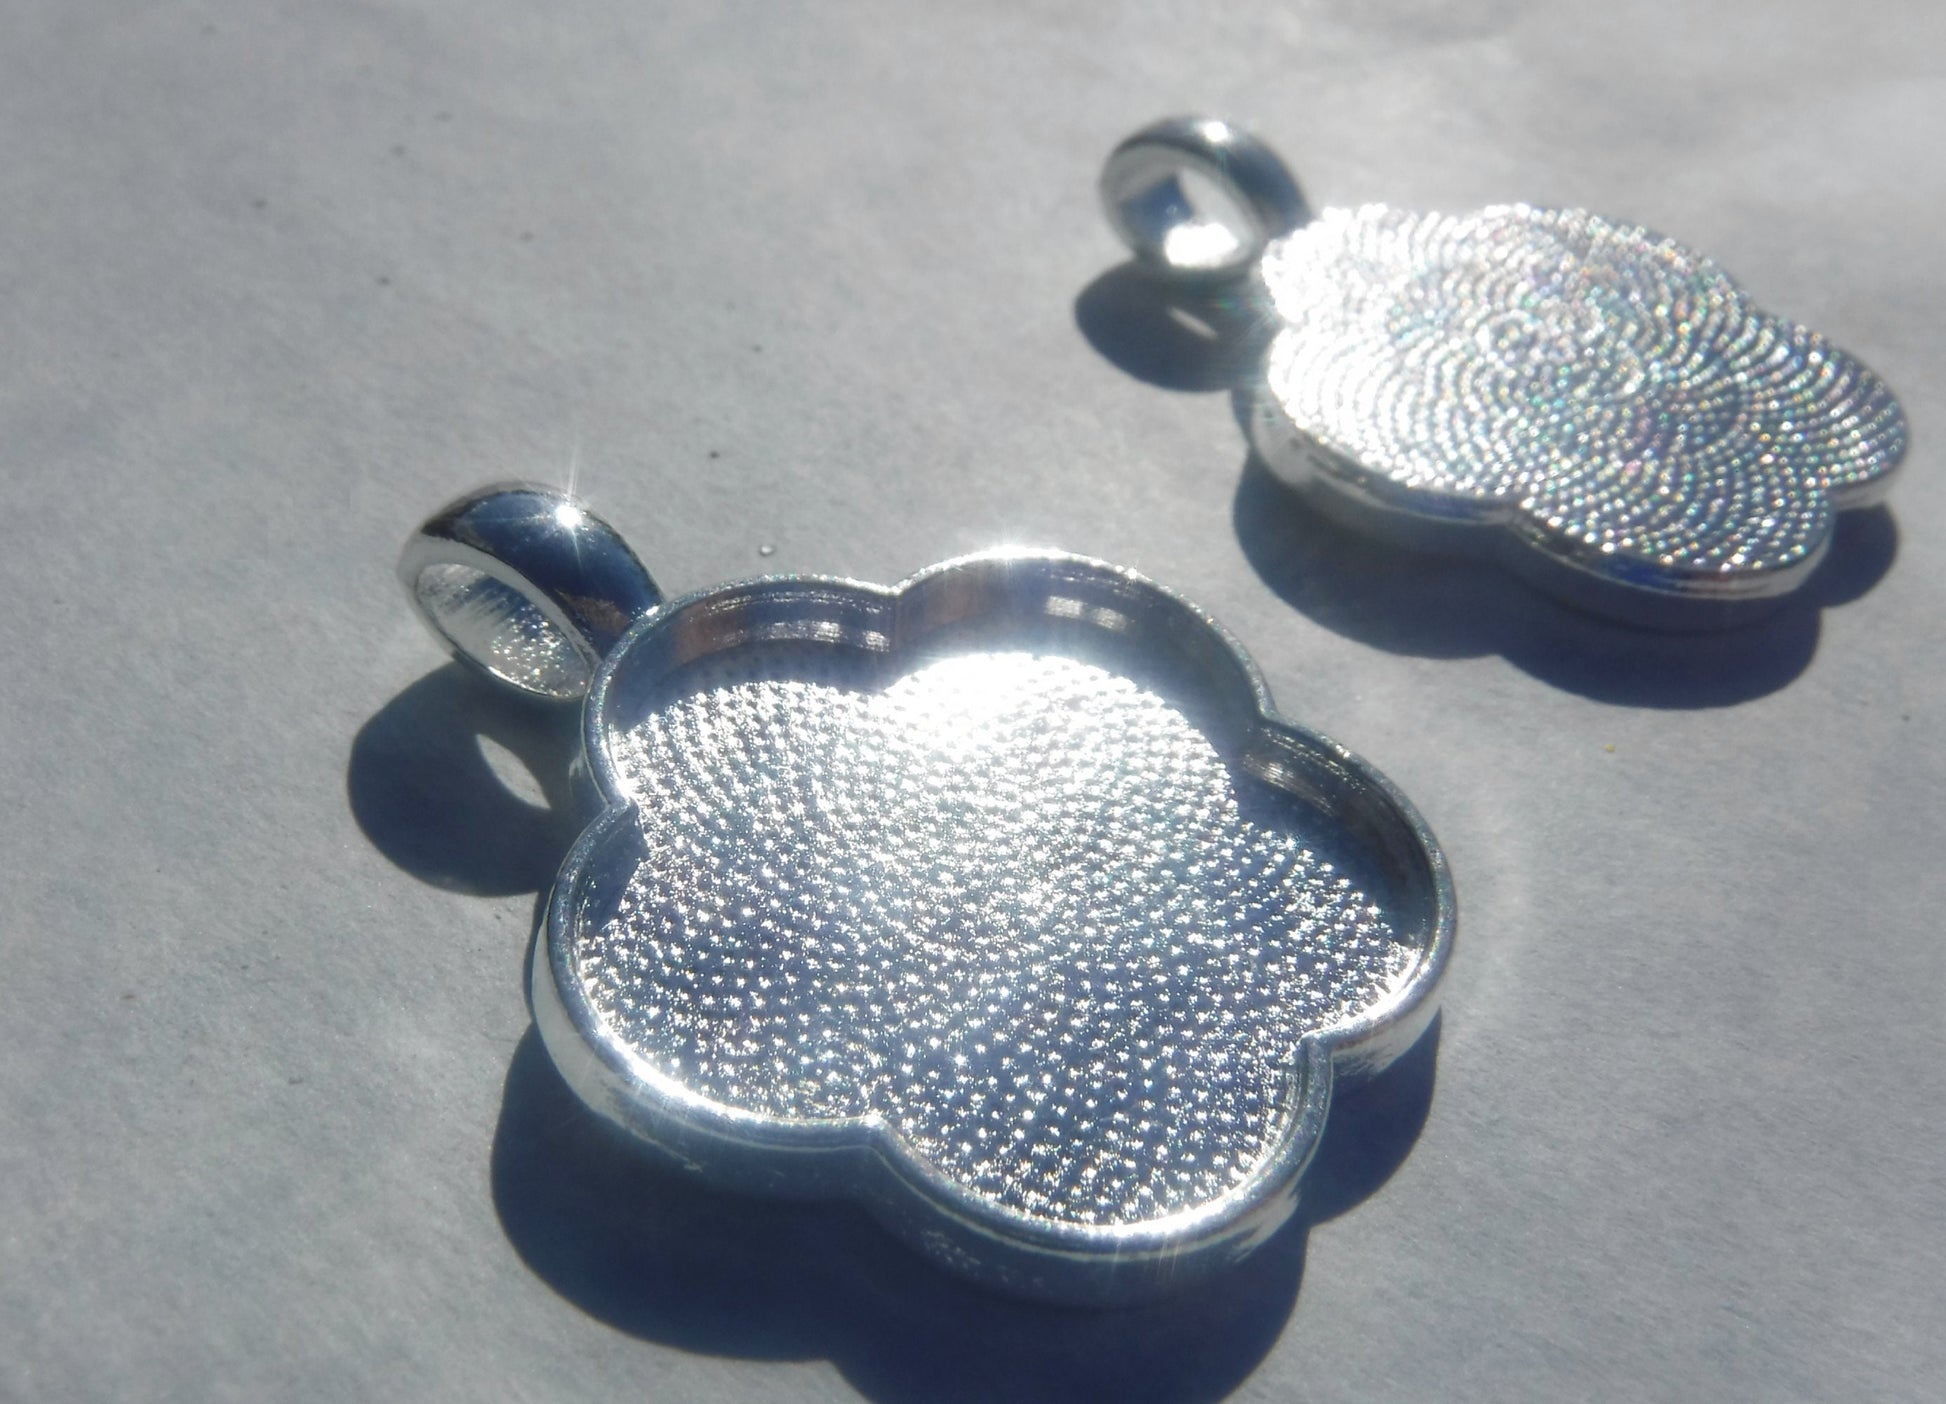 Flower Deep Pendant Setting - Silver Toned Blank - Cabochon Base - 25mm - Mosaic Jewelry